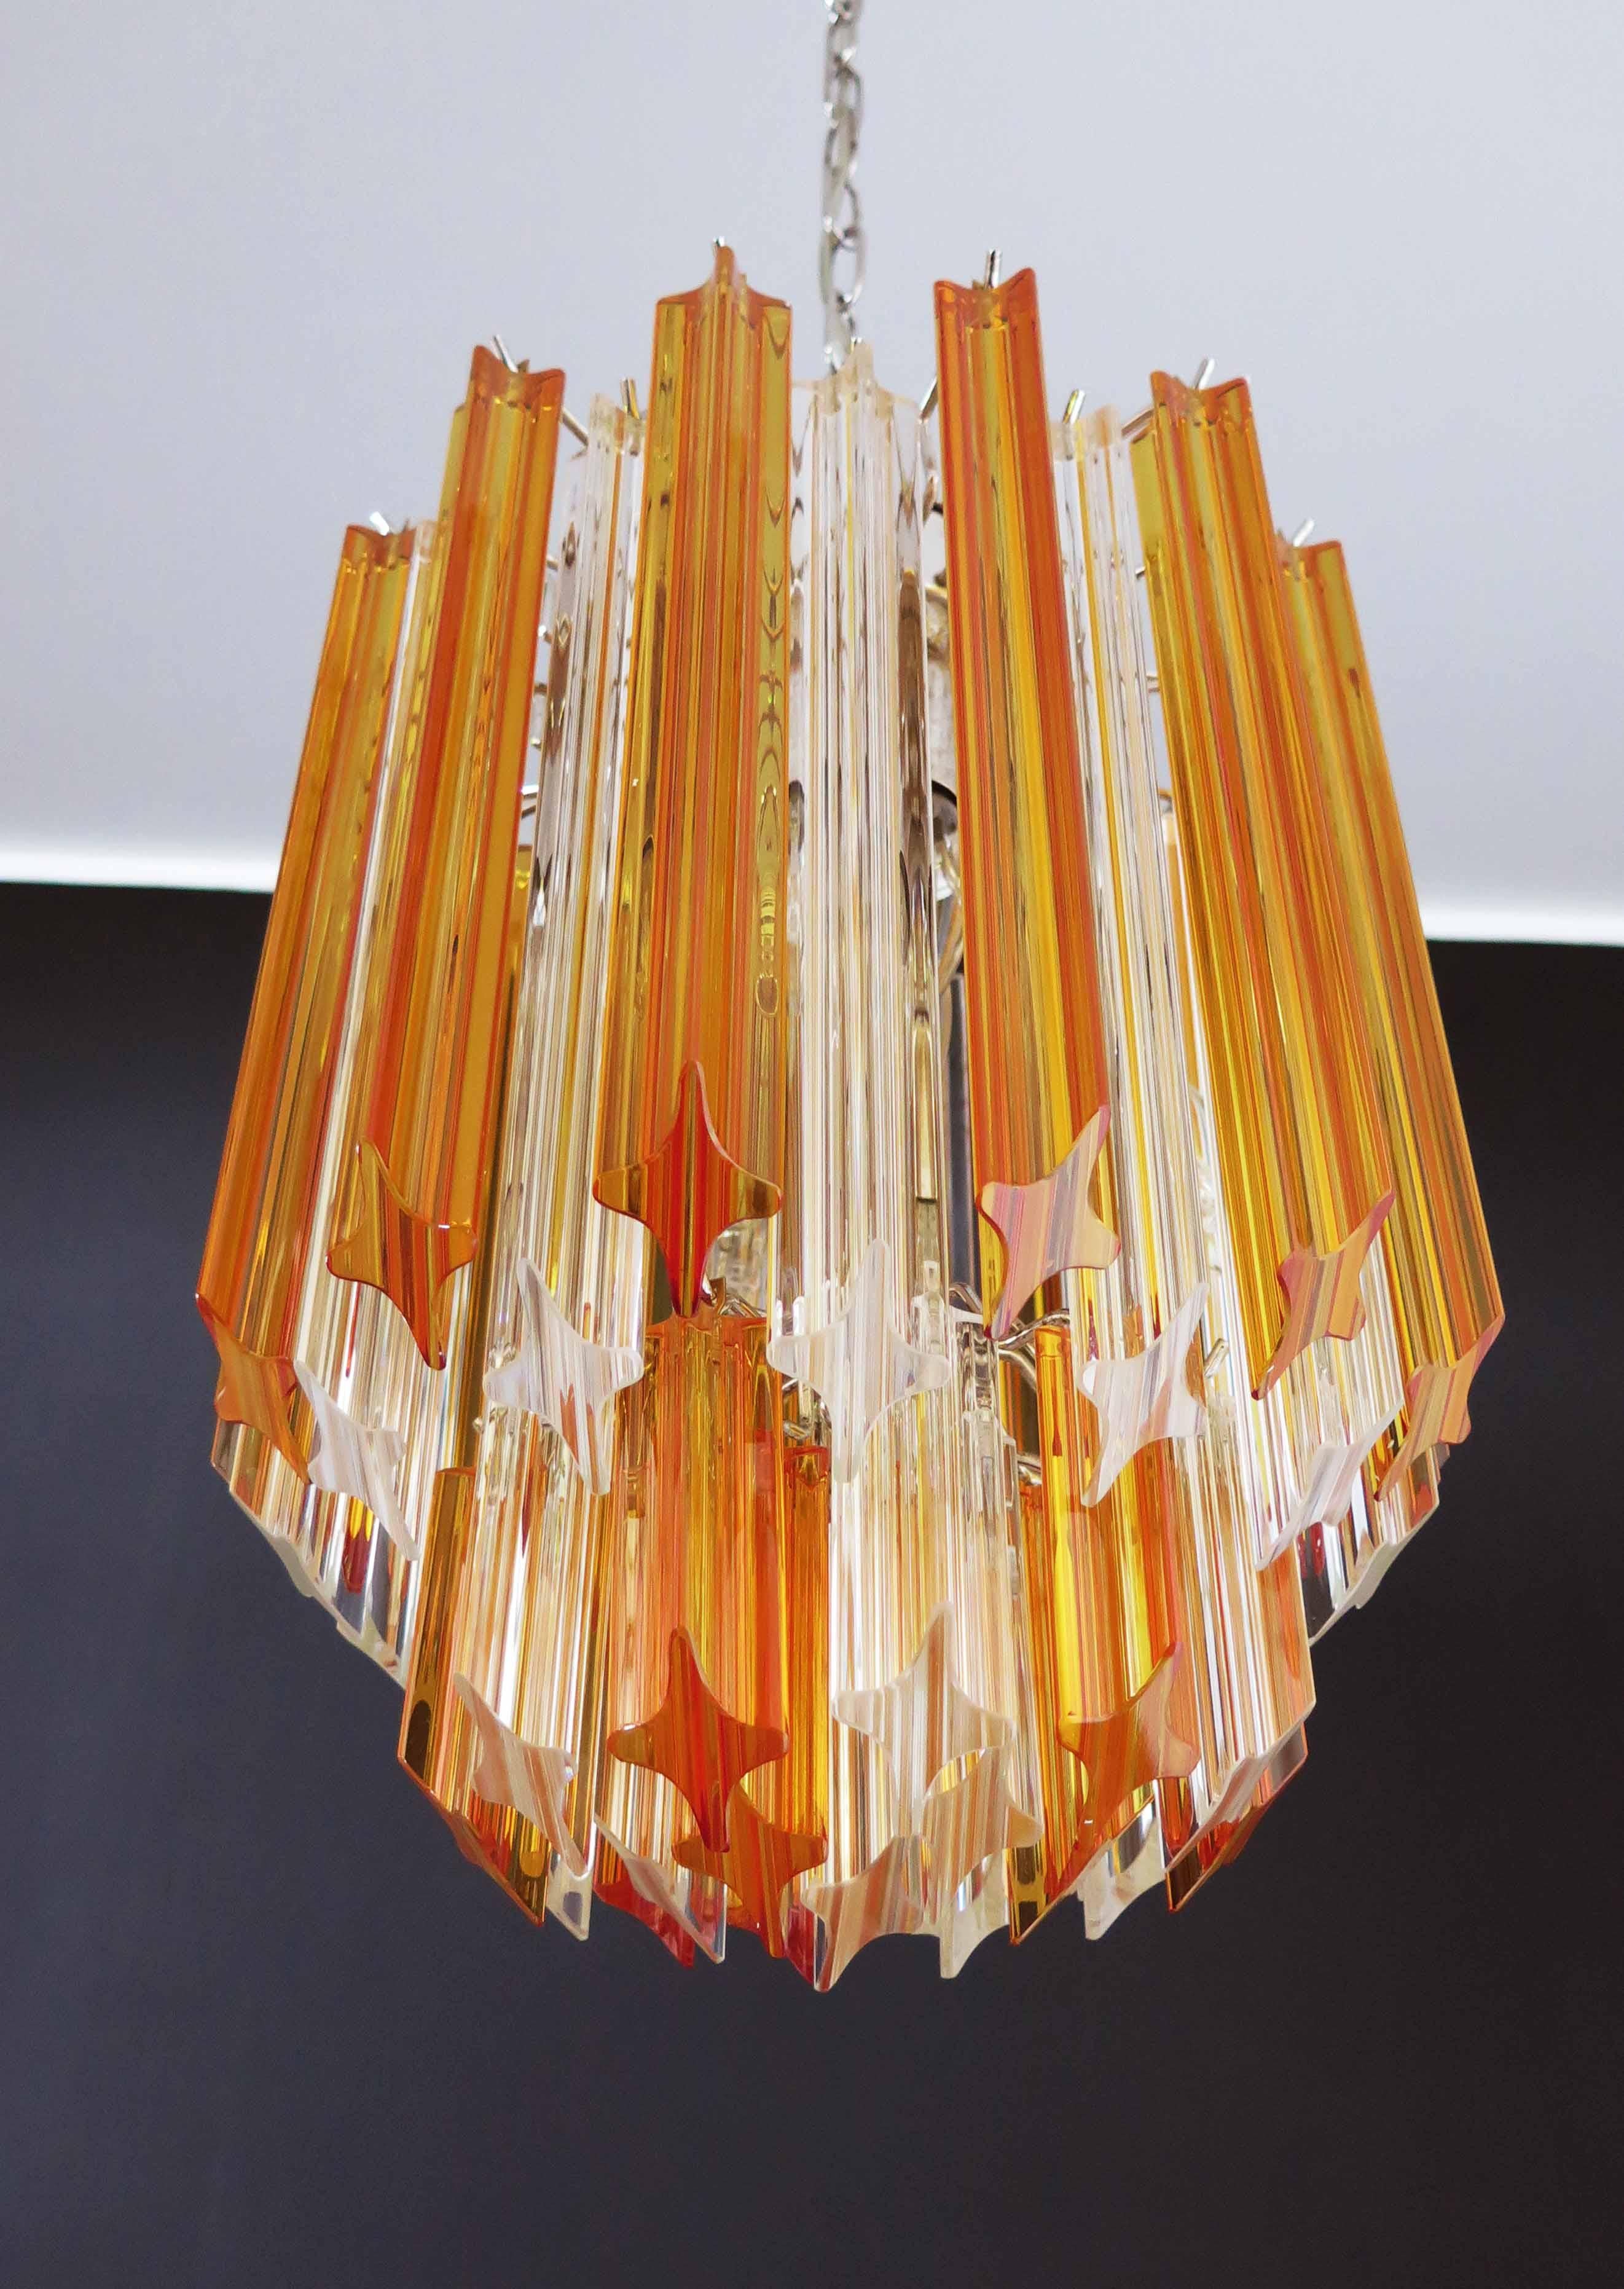 Mid-Century Modern Quadriedri Murano chandelier - 47 prisms - trasparent amber